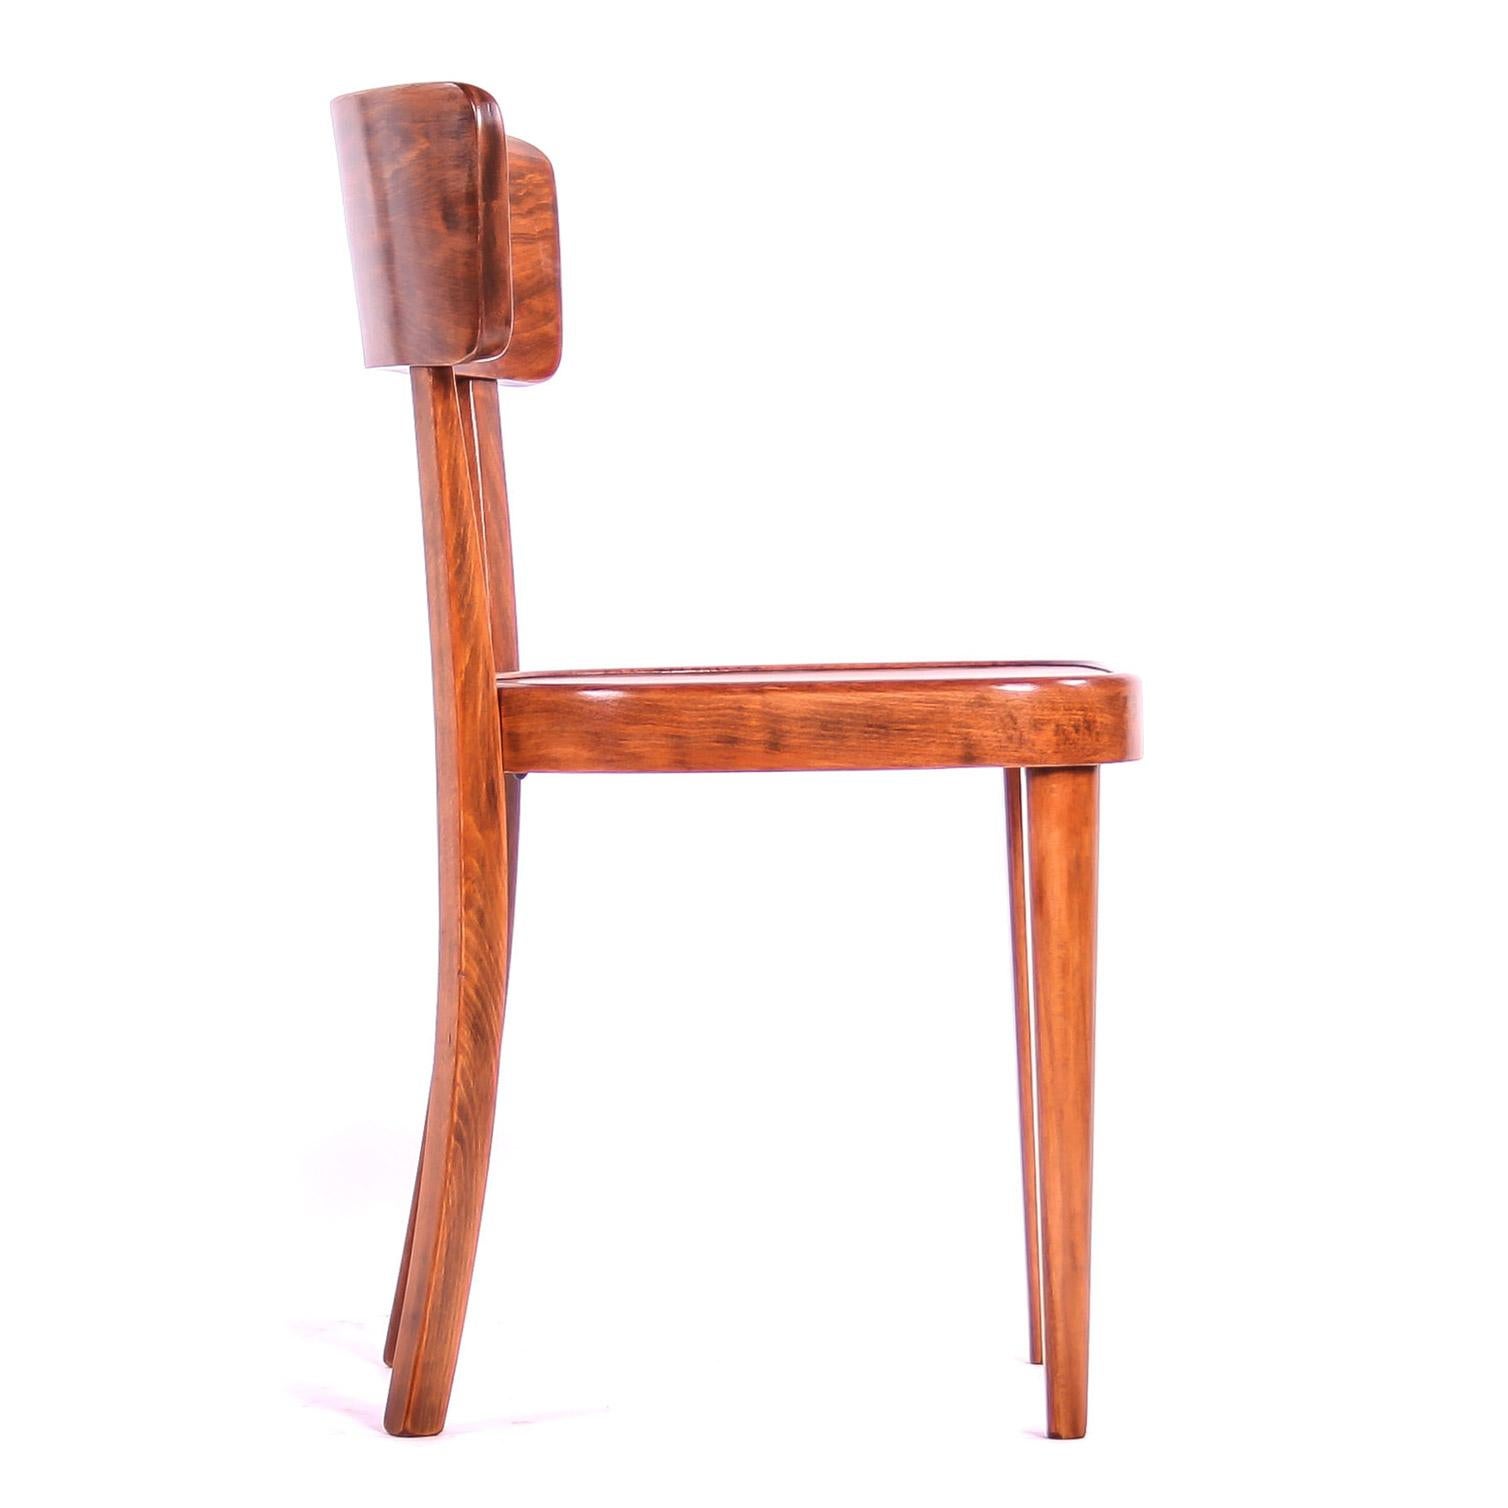 Wood Czech Interwar Avantgard Design Dining Chairs by Jindrich Halabala 'Up Zavody' For Sale